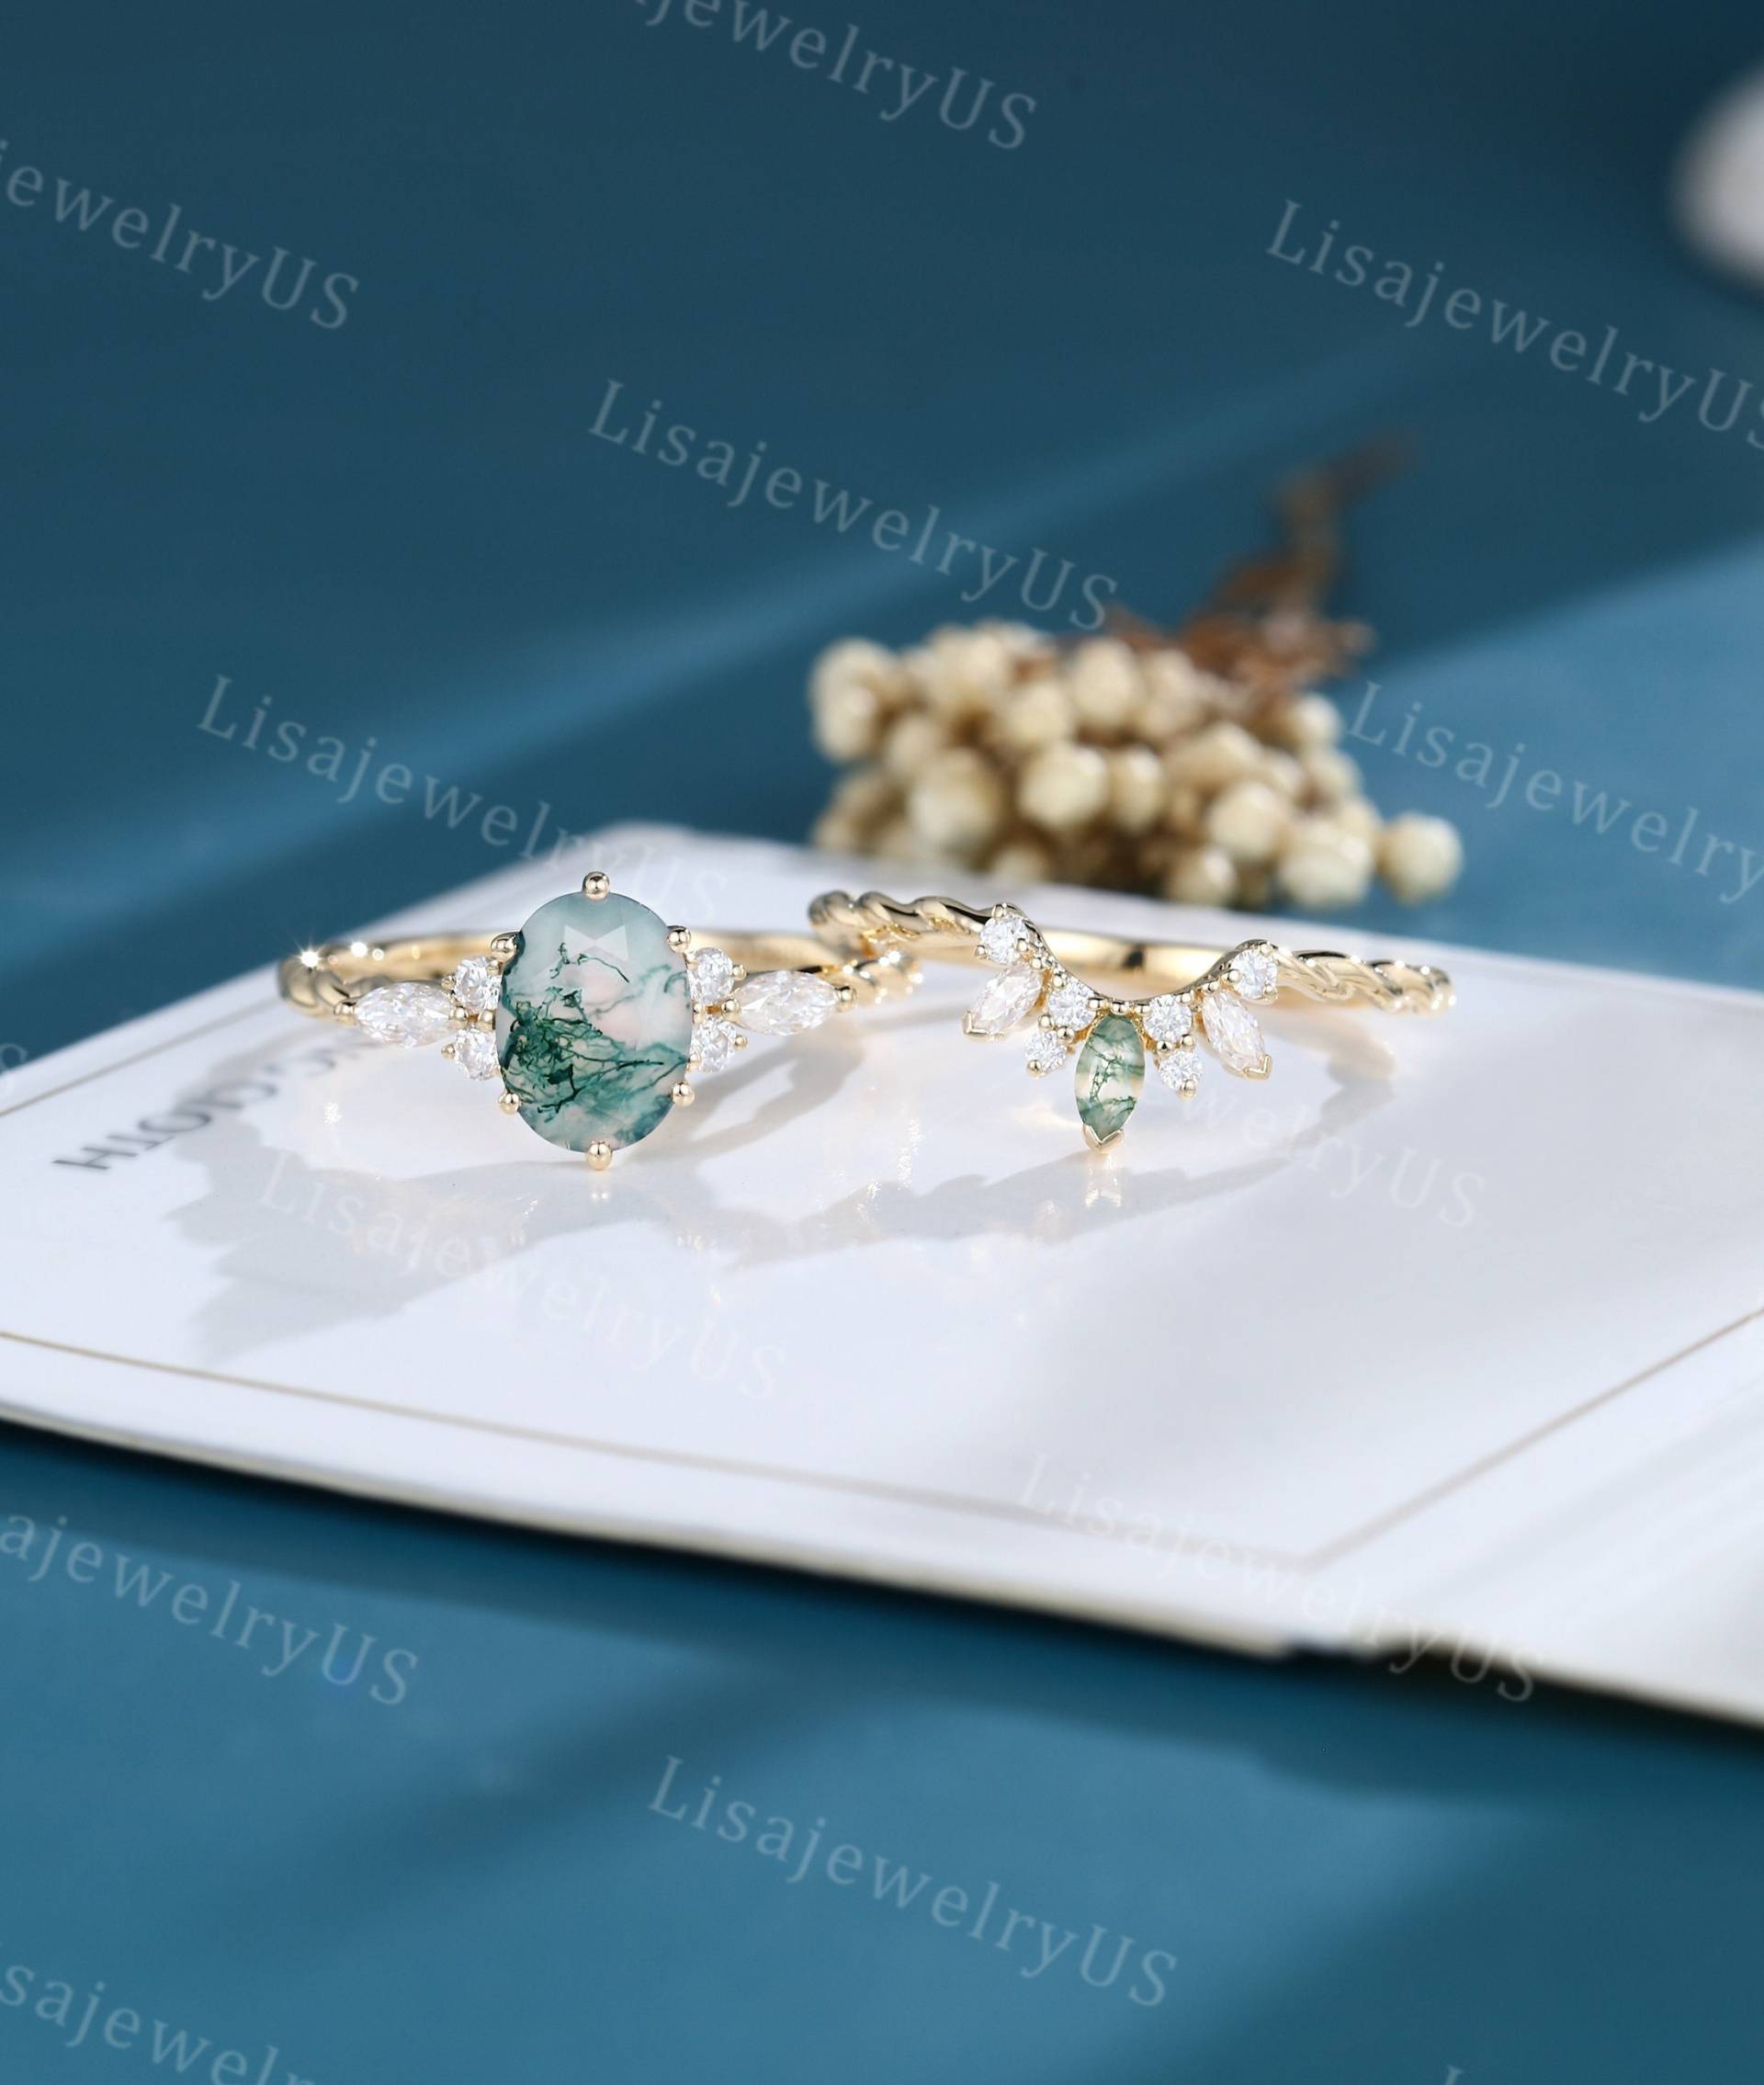 Oval Moosachat Verlobungsring Set Vintage Moissanite Gelbgold Diamant 3/4 Eternity Twisted von LisajewelryUS